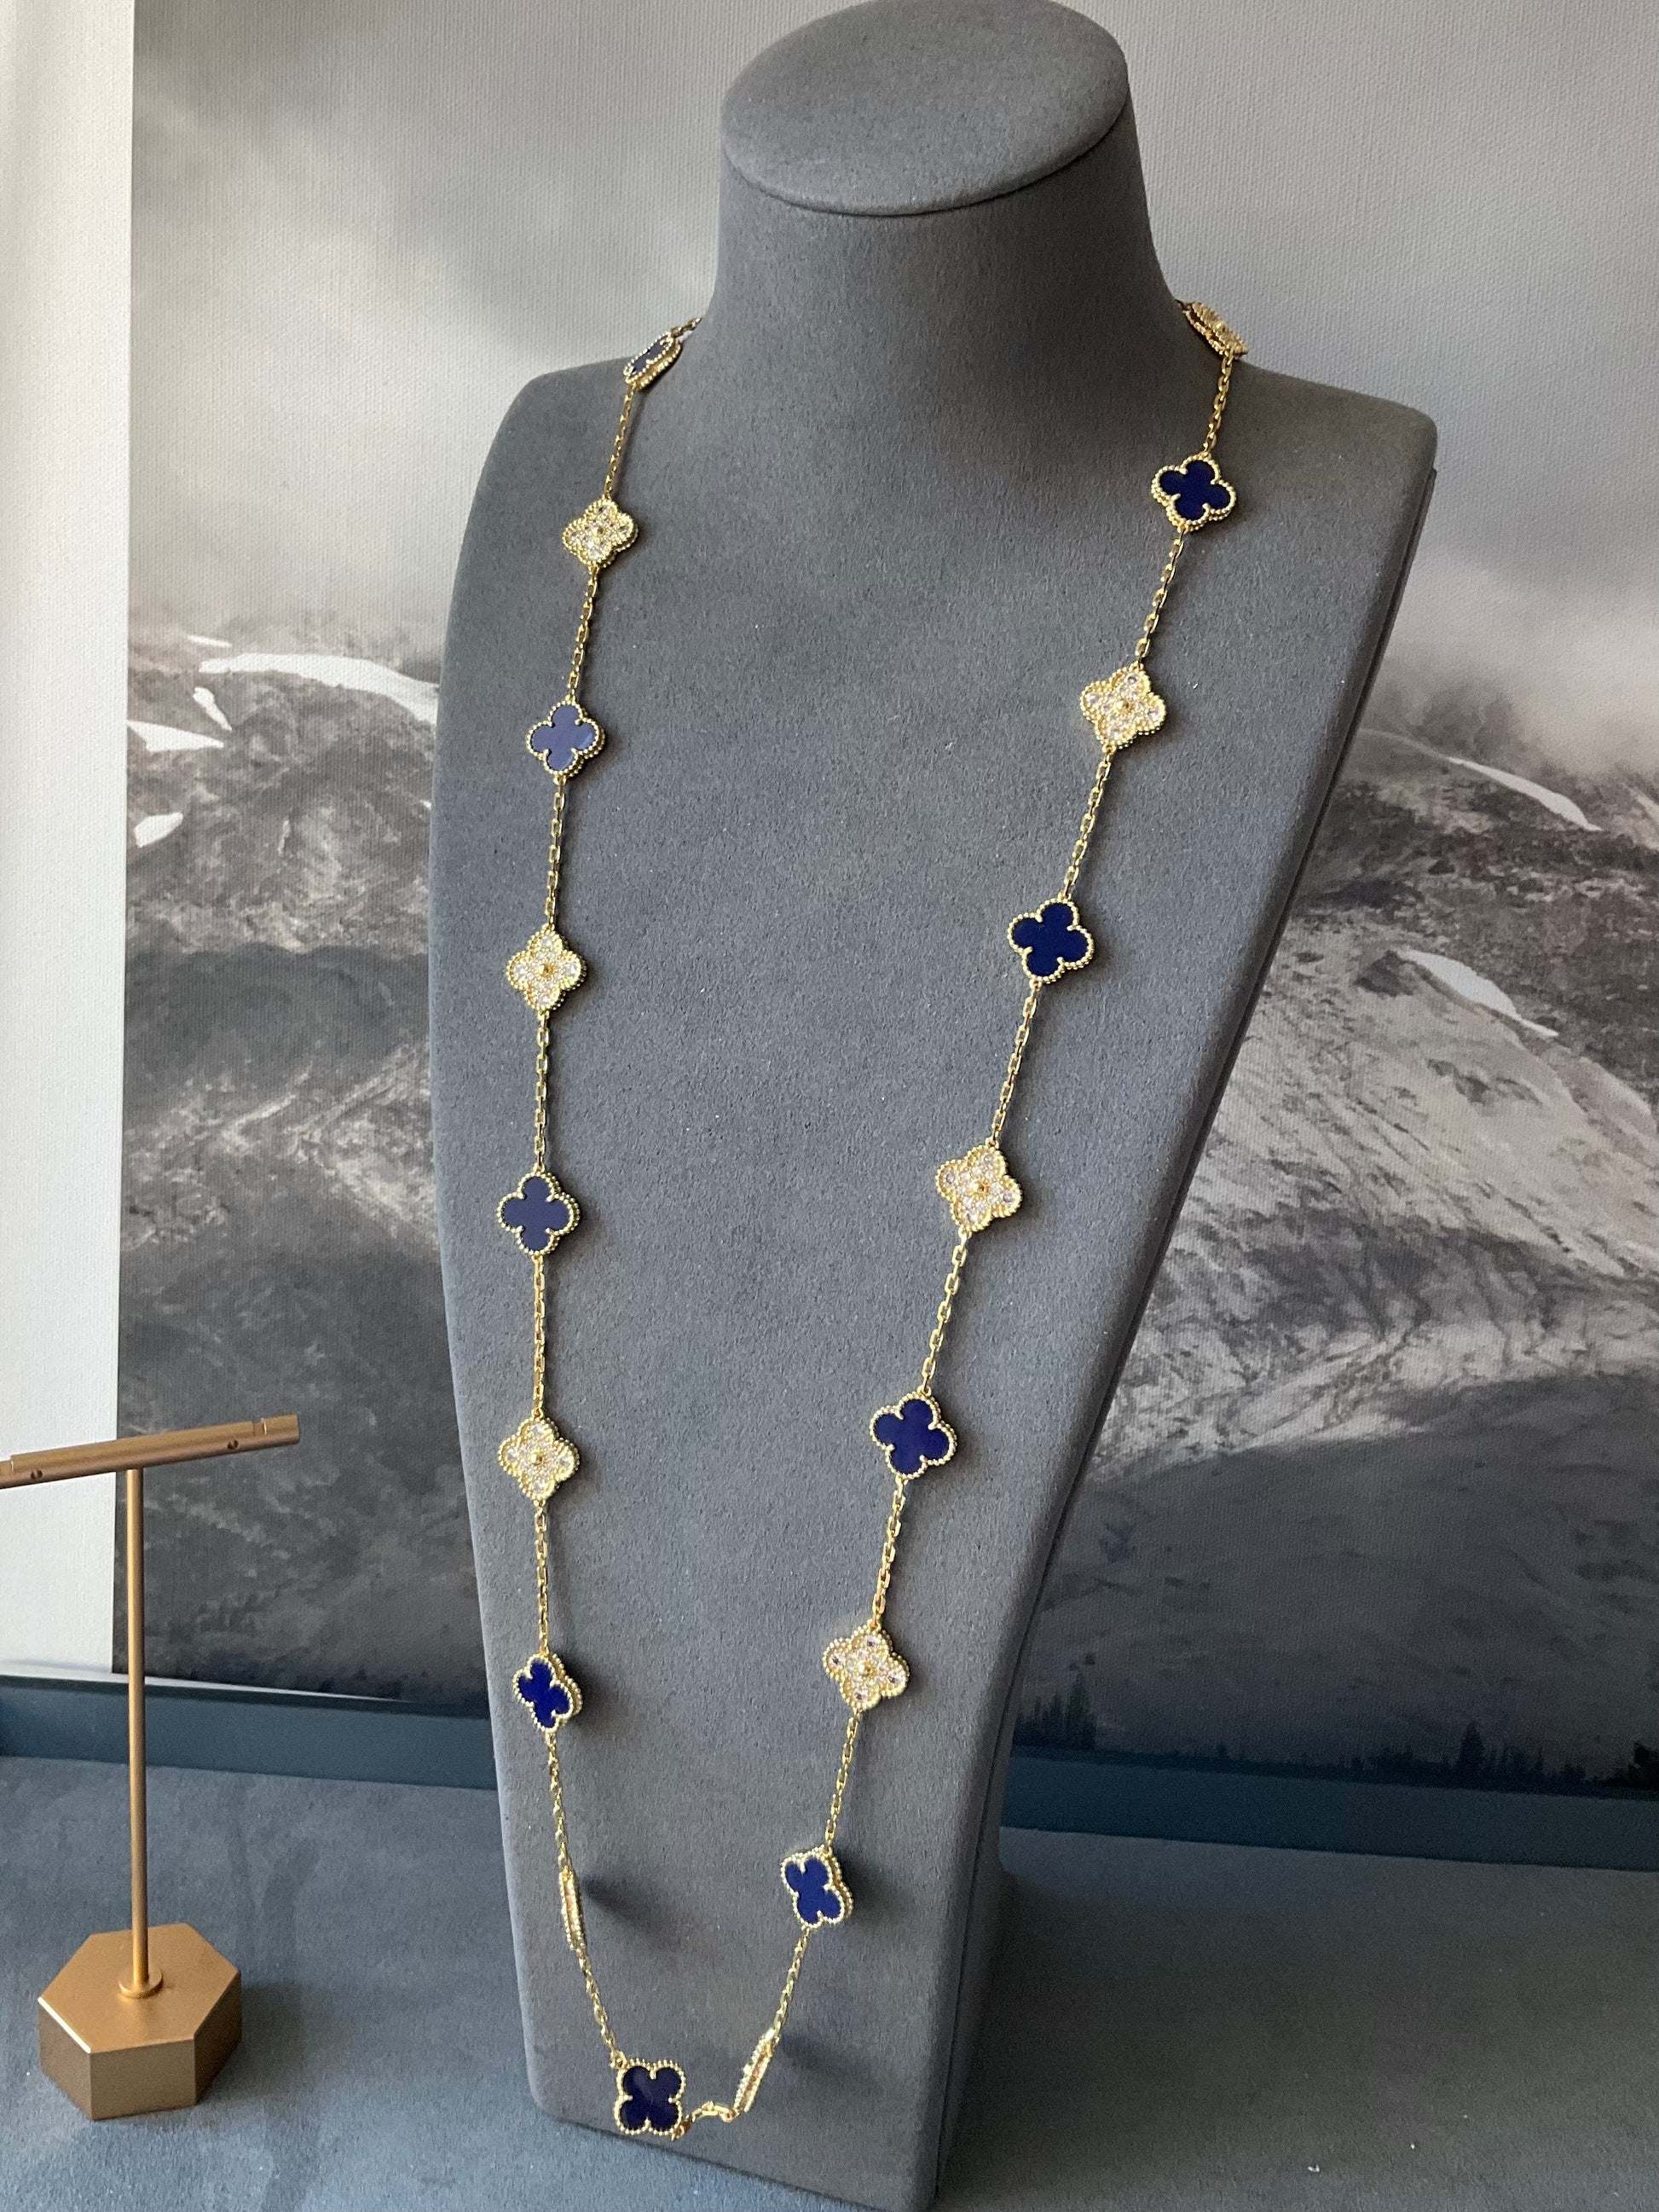 20 motifs Lapis lazuli cz 15mm clover necklace 925 silver with 18k gold plated 84cm - ParadiseKissCo